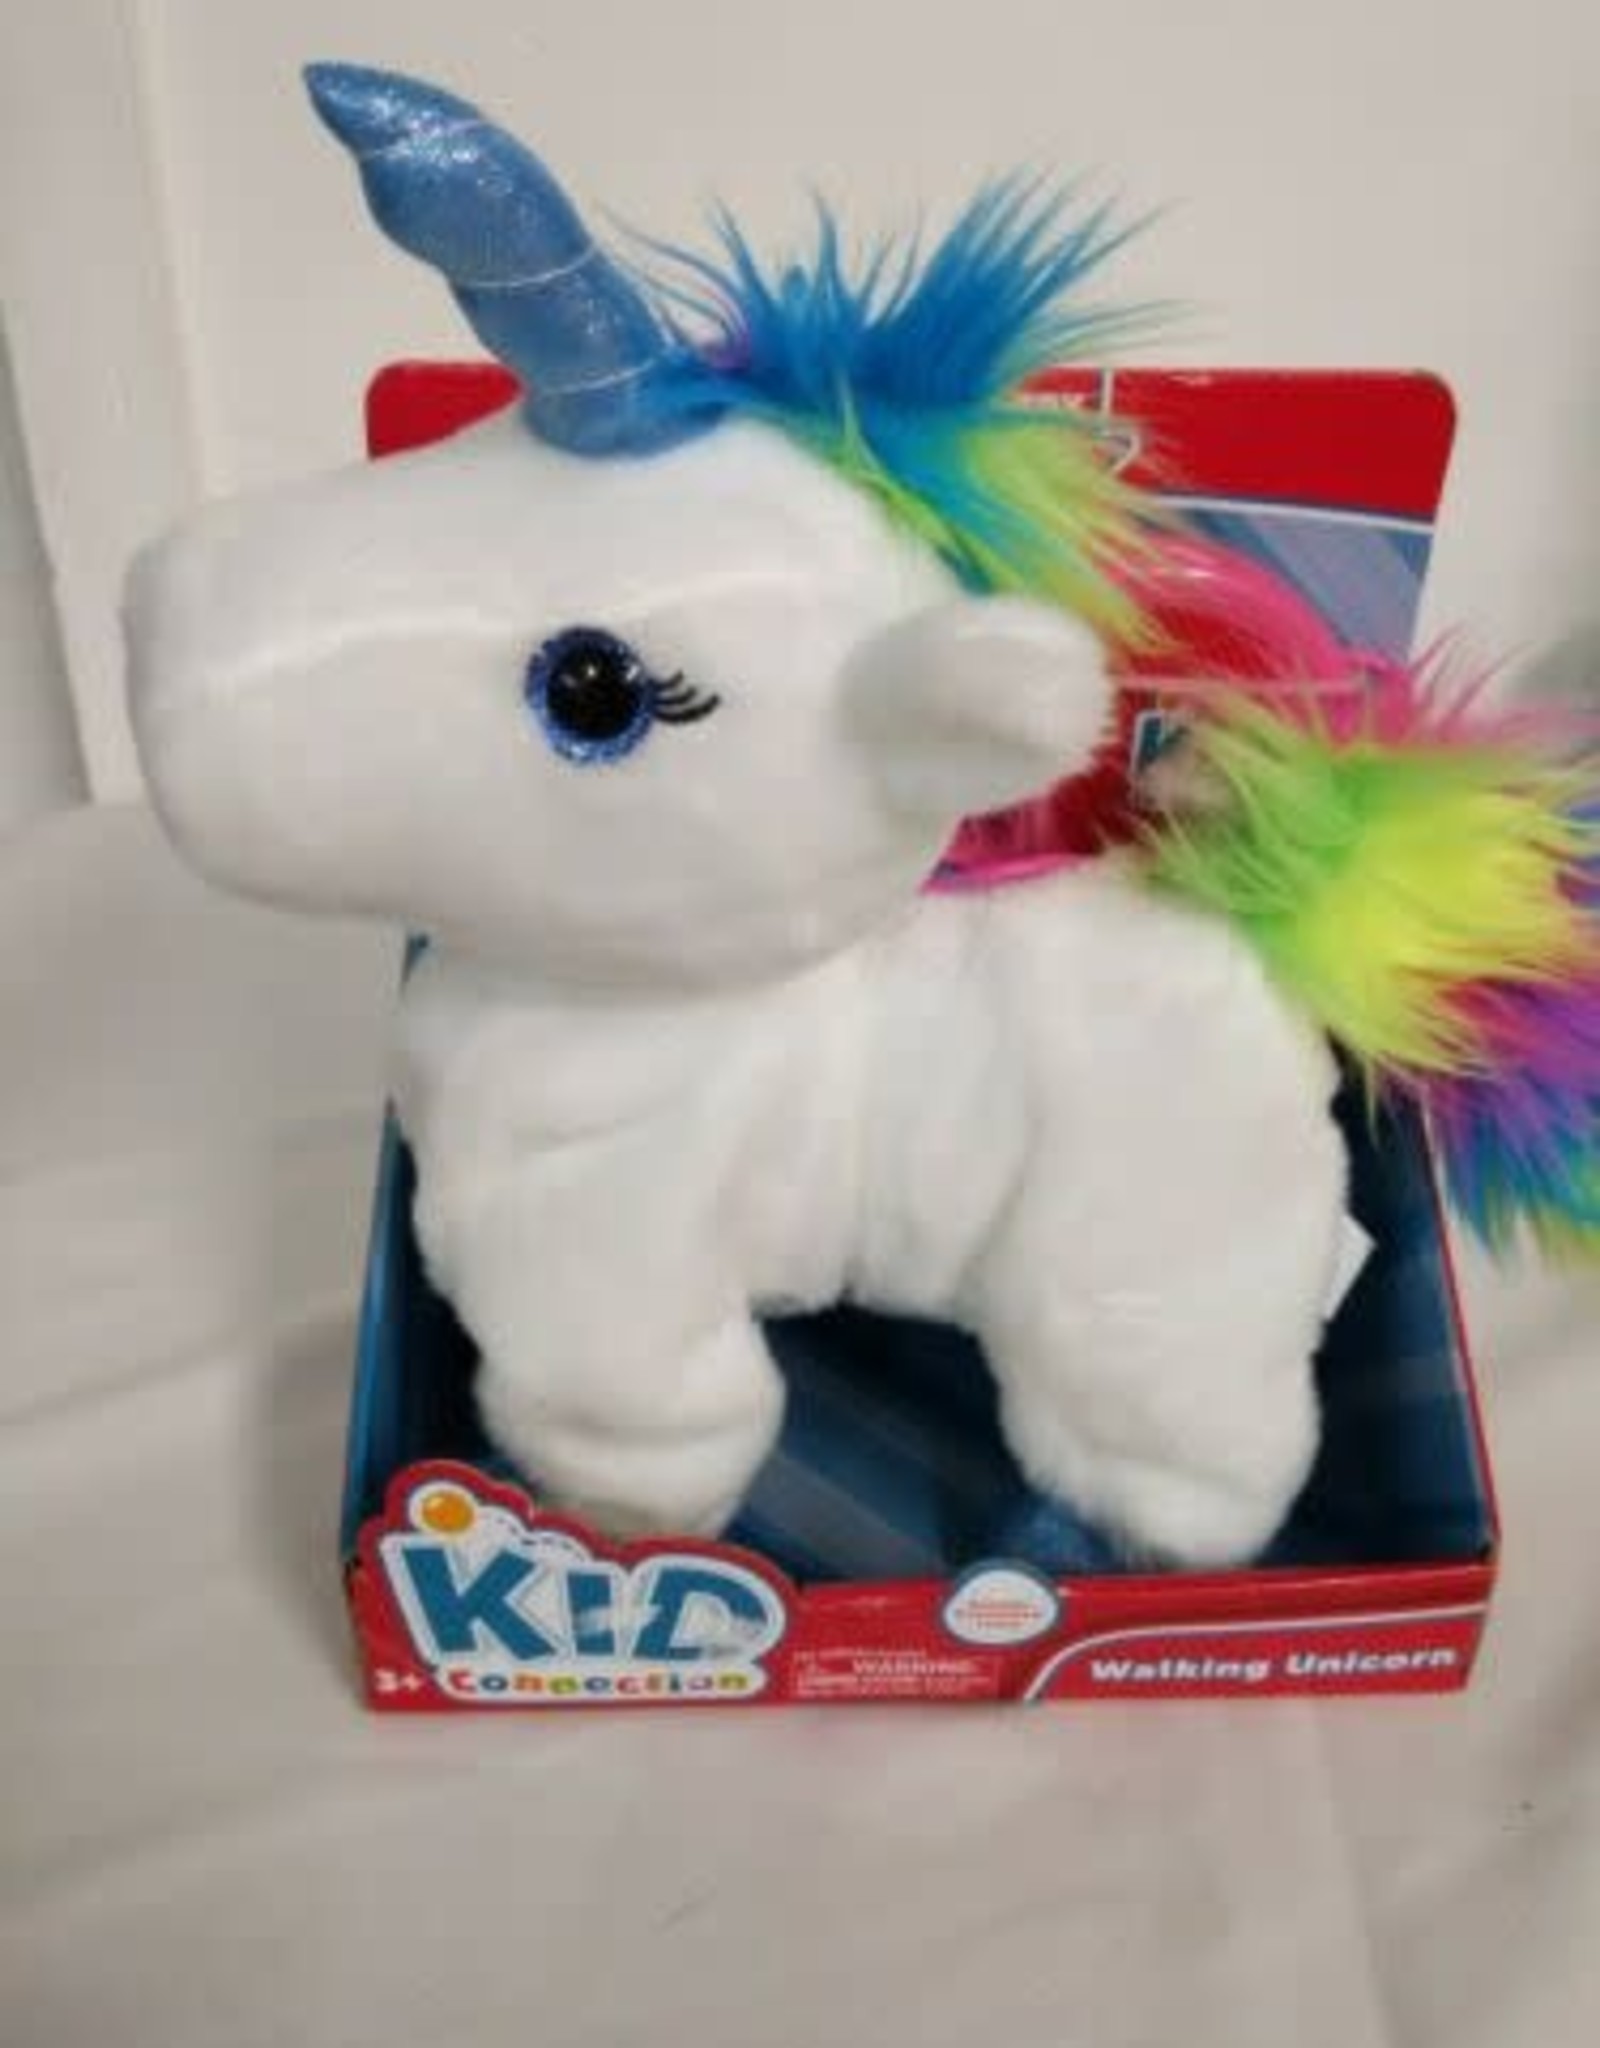 kid connection unicorn